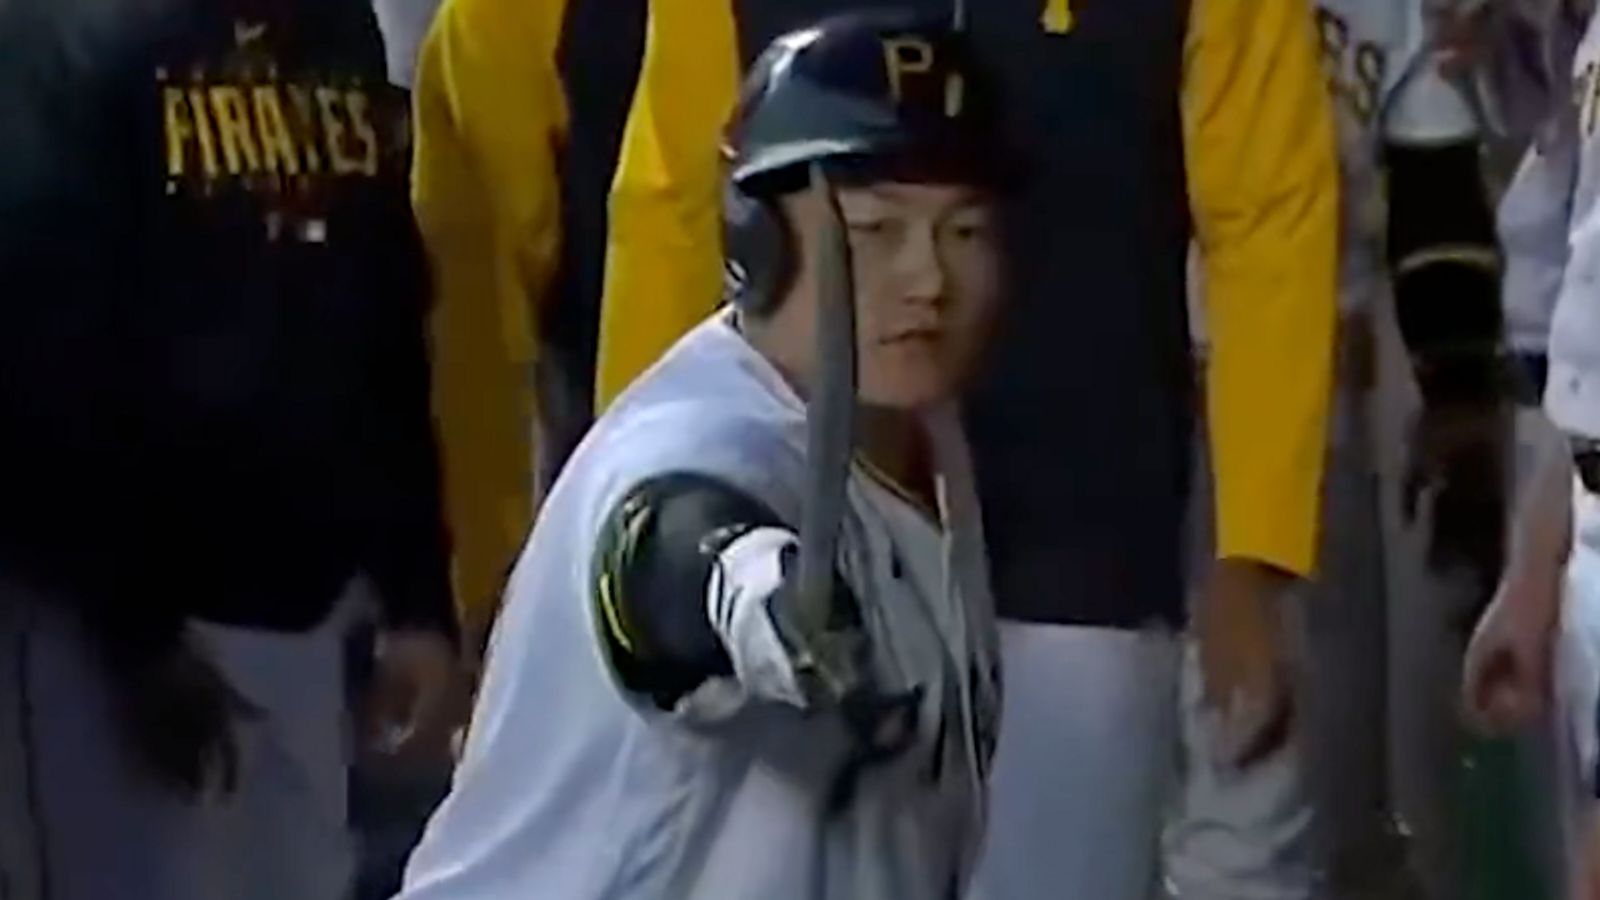 Whether it's swinging a bat or a sword, Pirates DH Ji-Man Choi